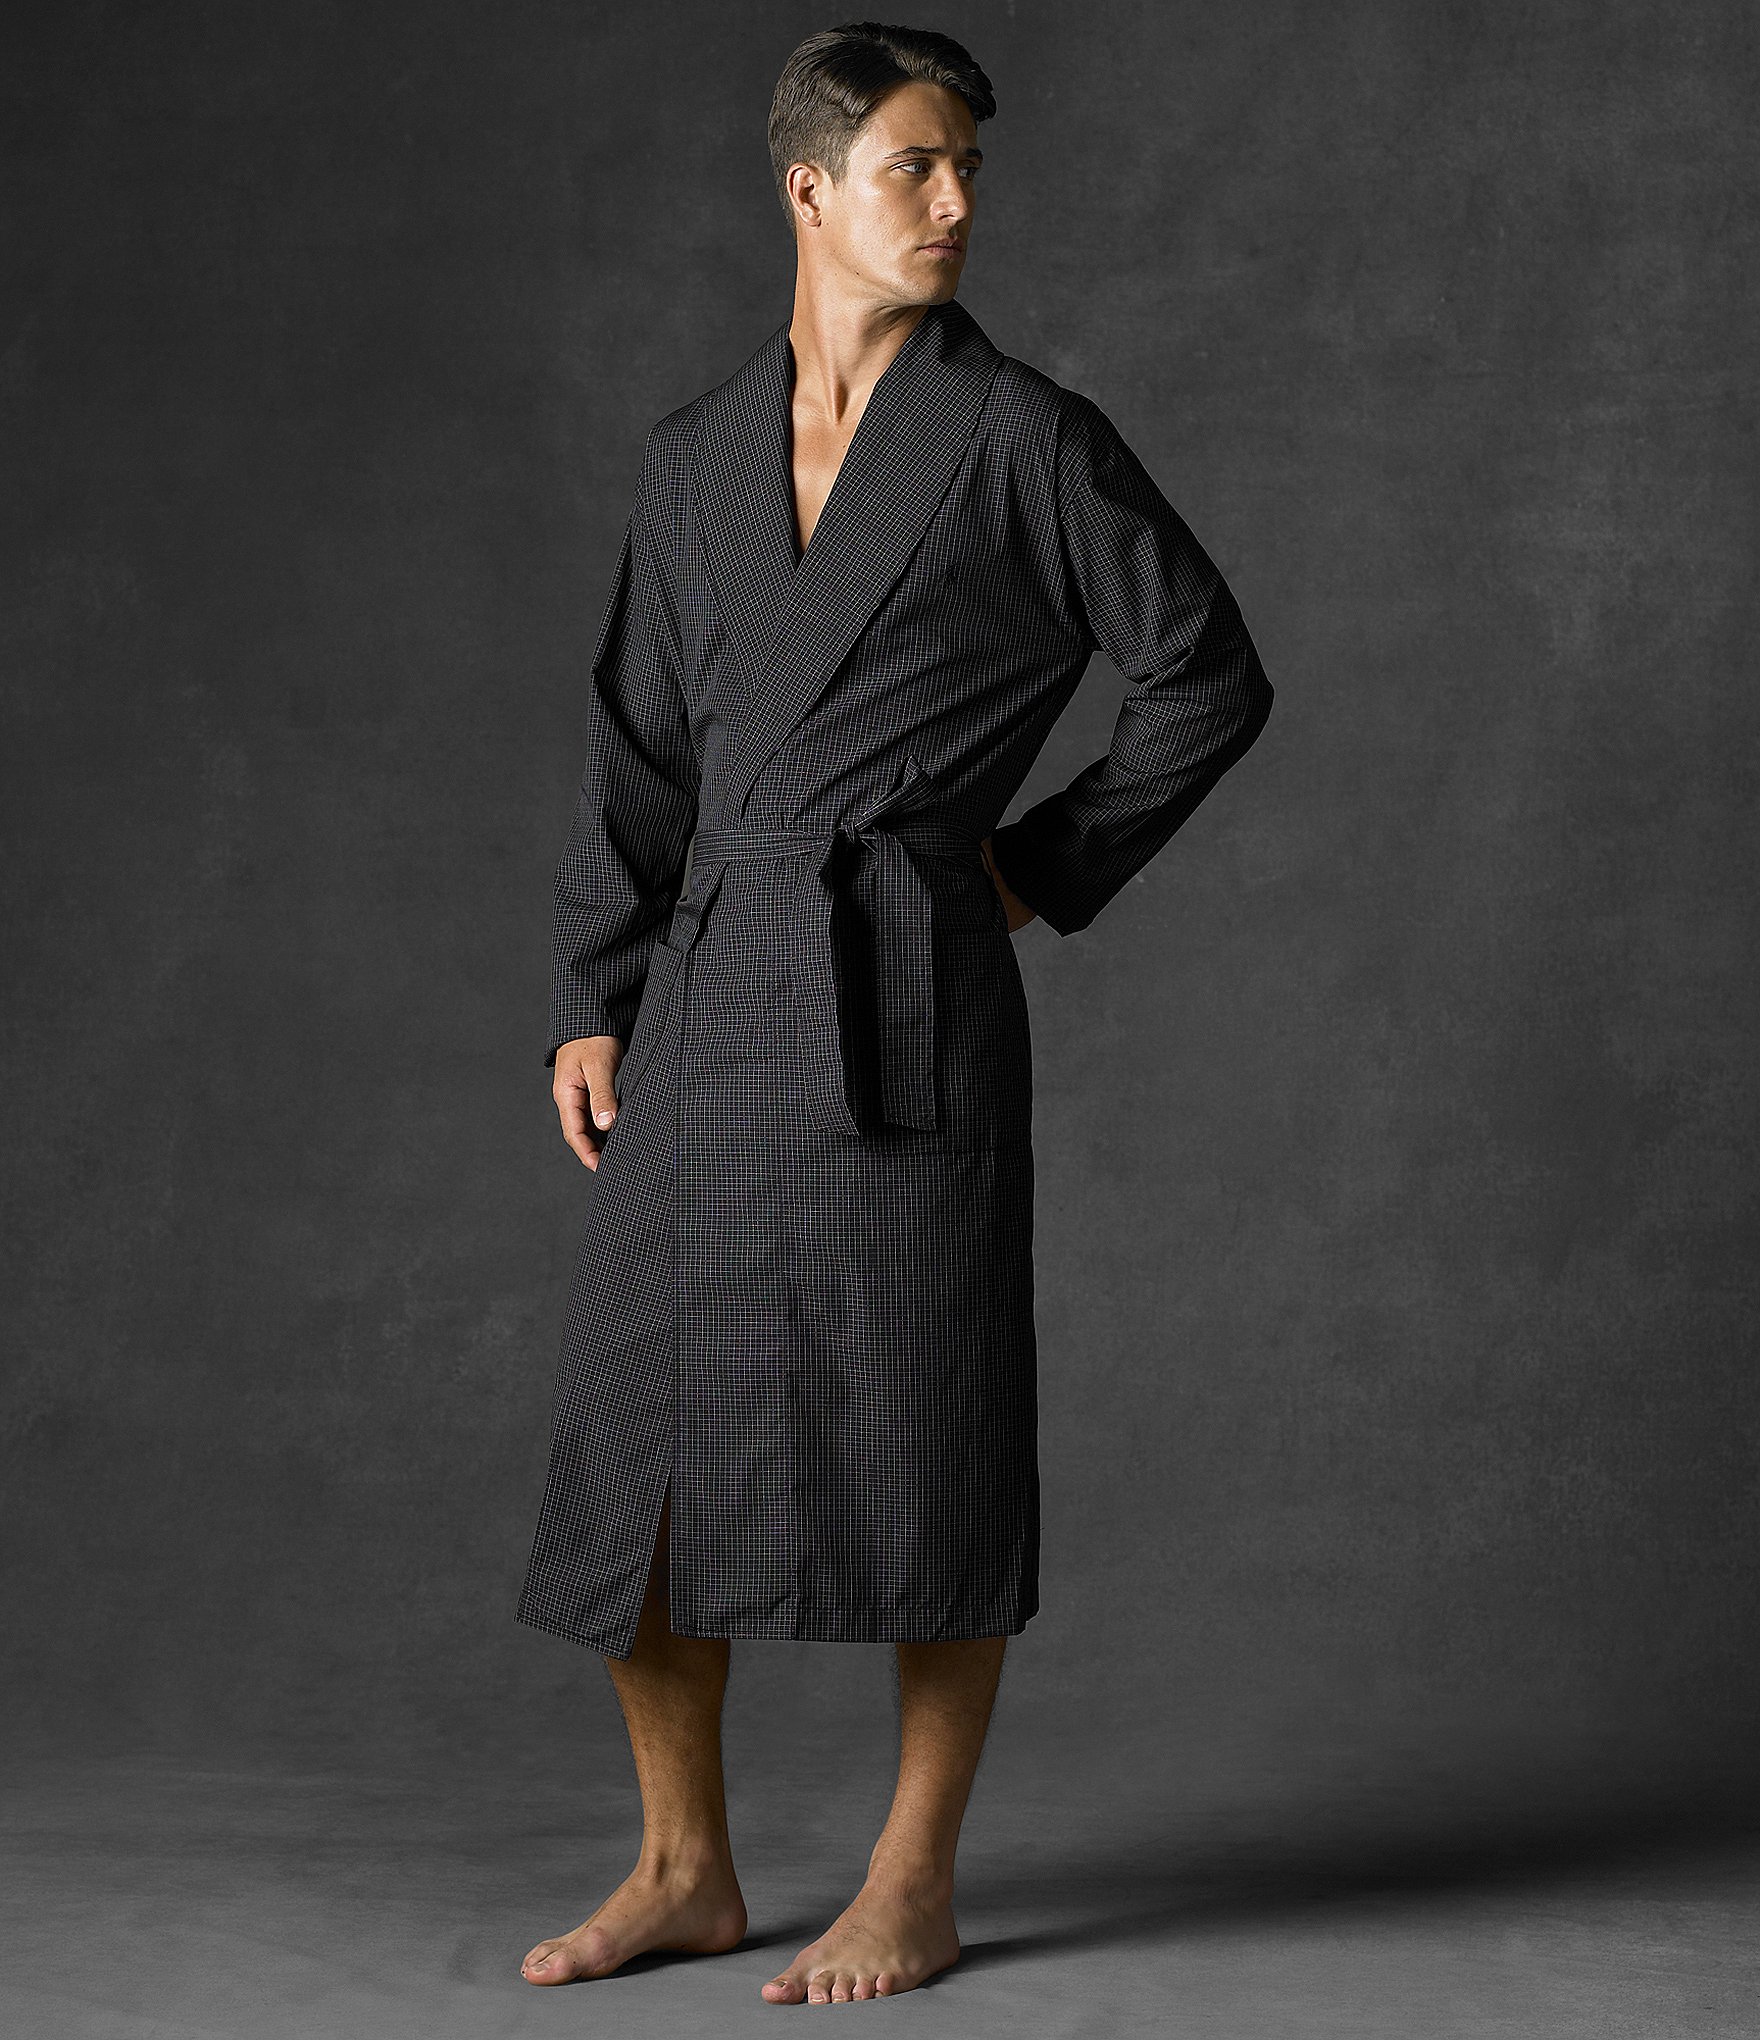 polo ralph lauren cotton robe